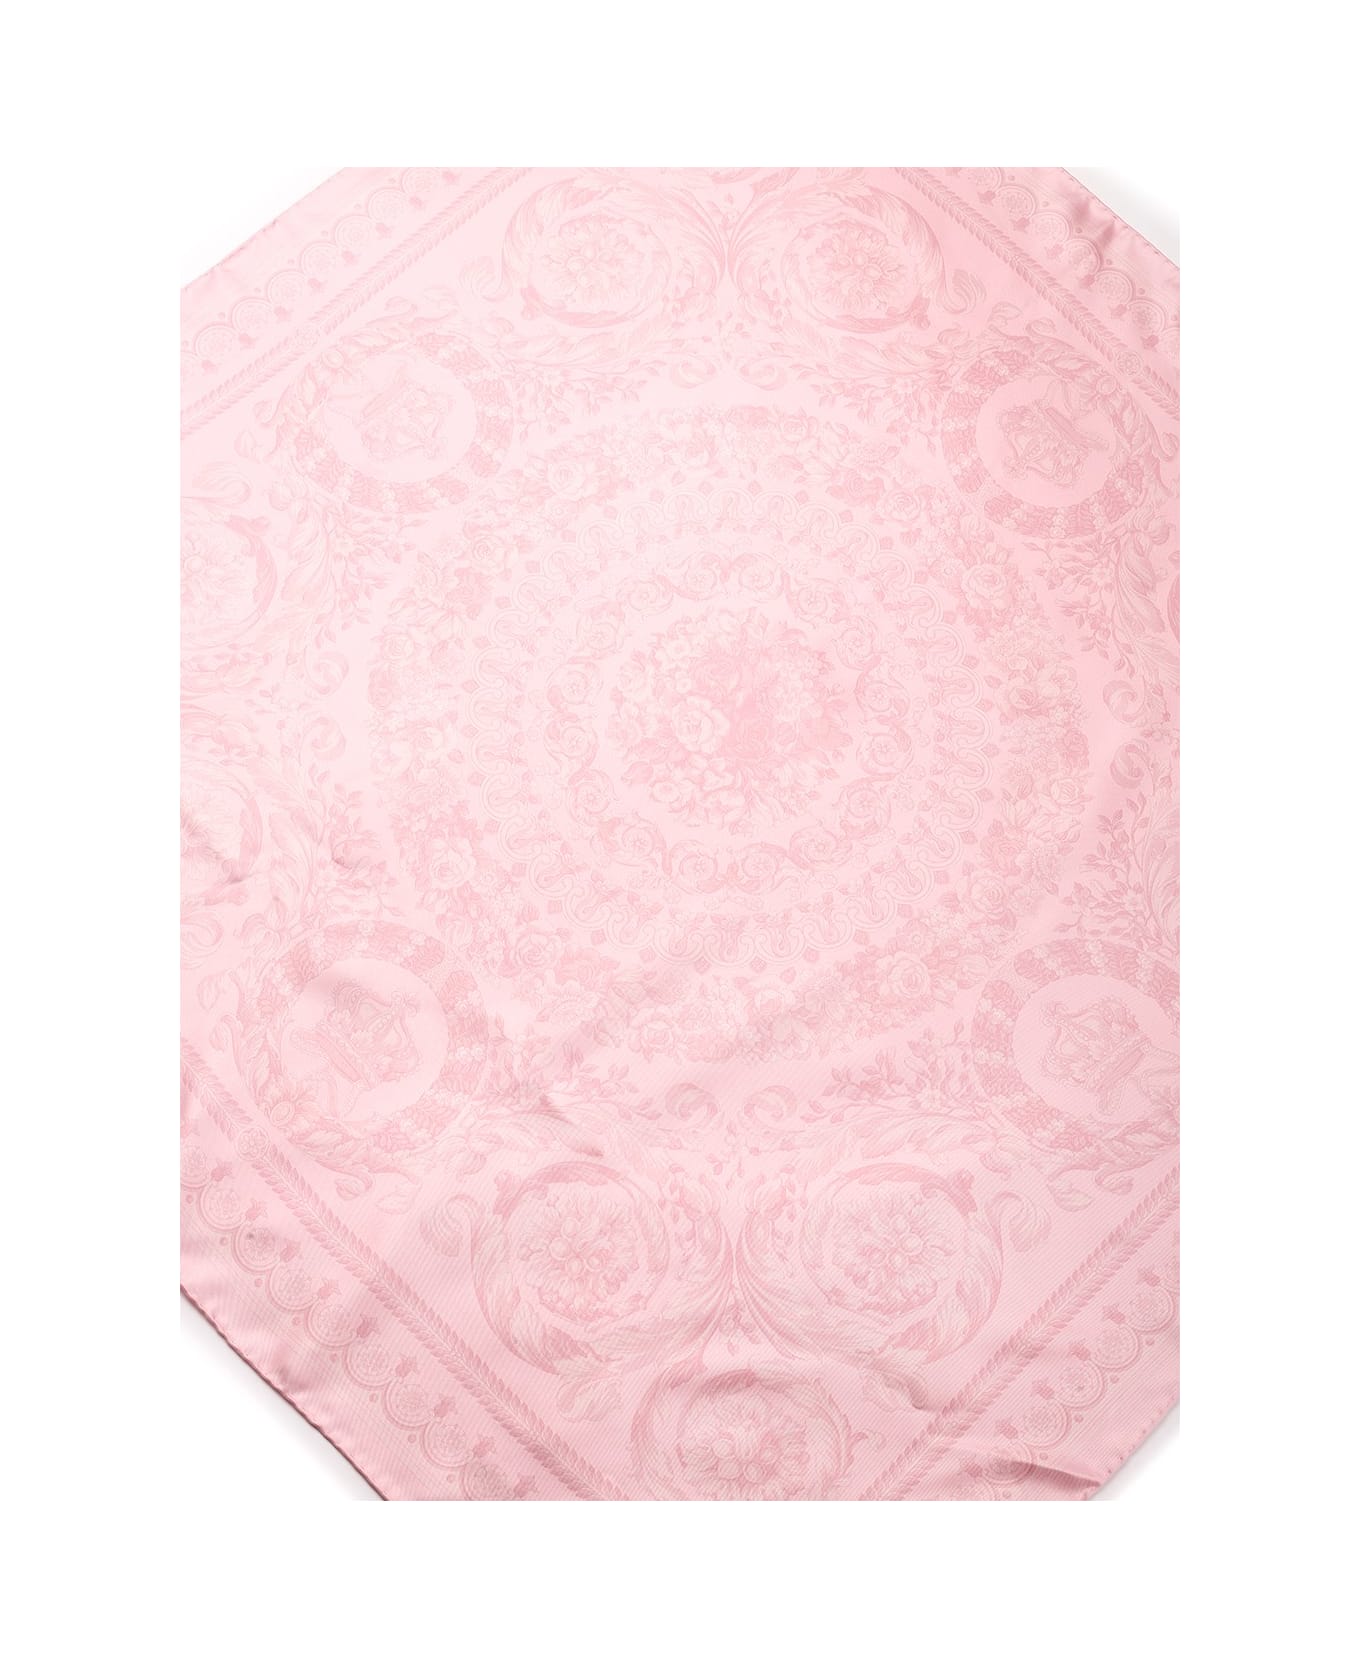 Versace Silk Twill Scarf - Pale pink